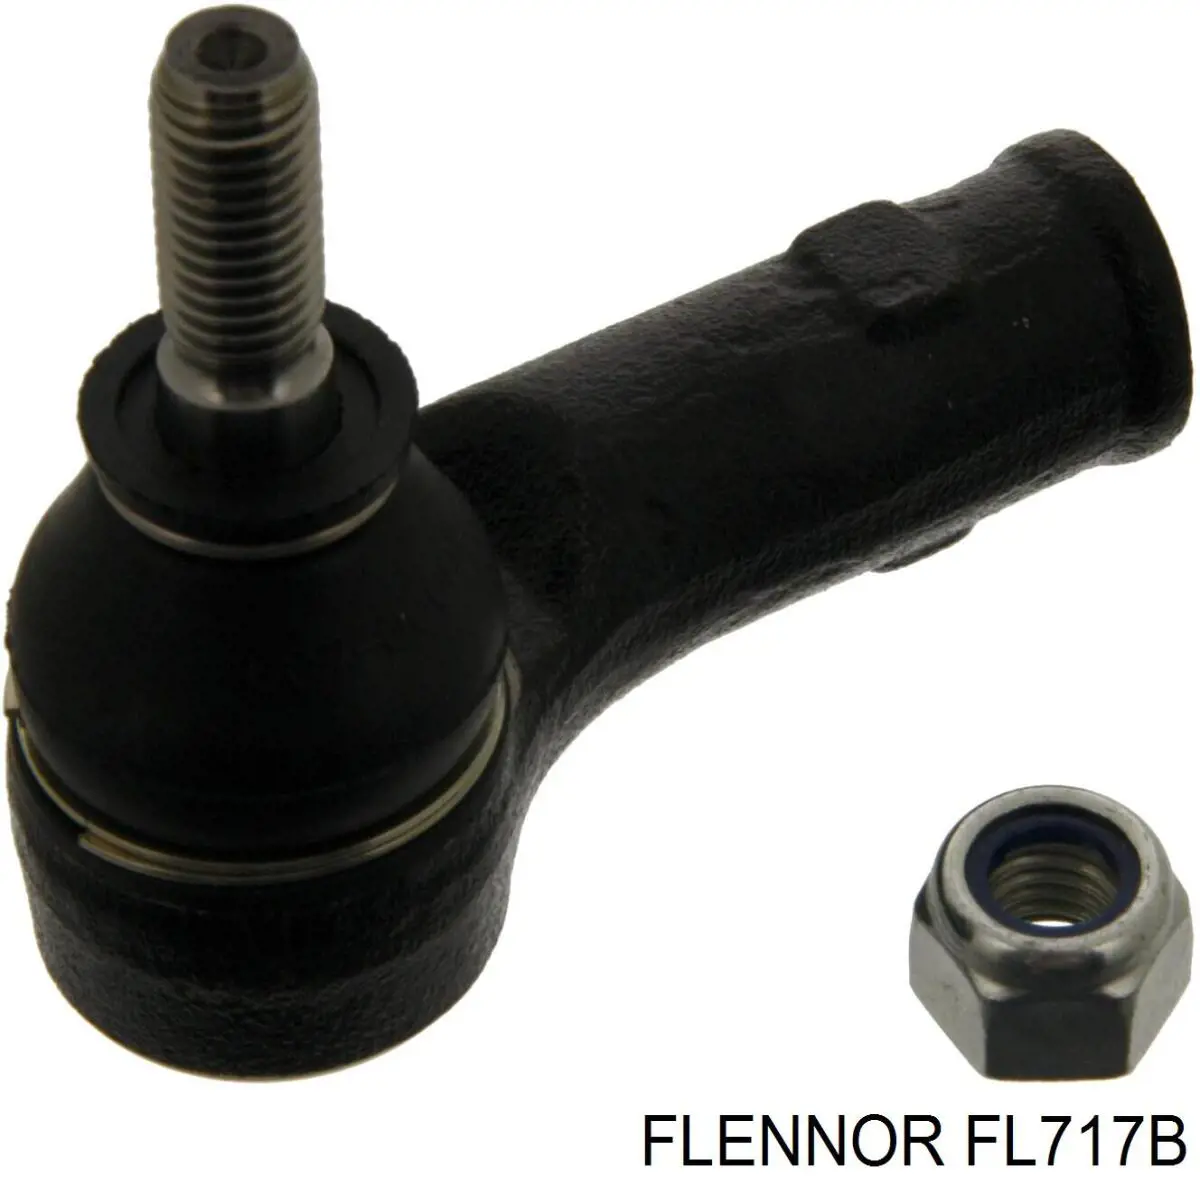 FL717B Flennor rótula barra de acoplamiento exterior